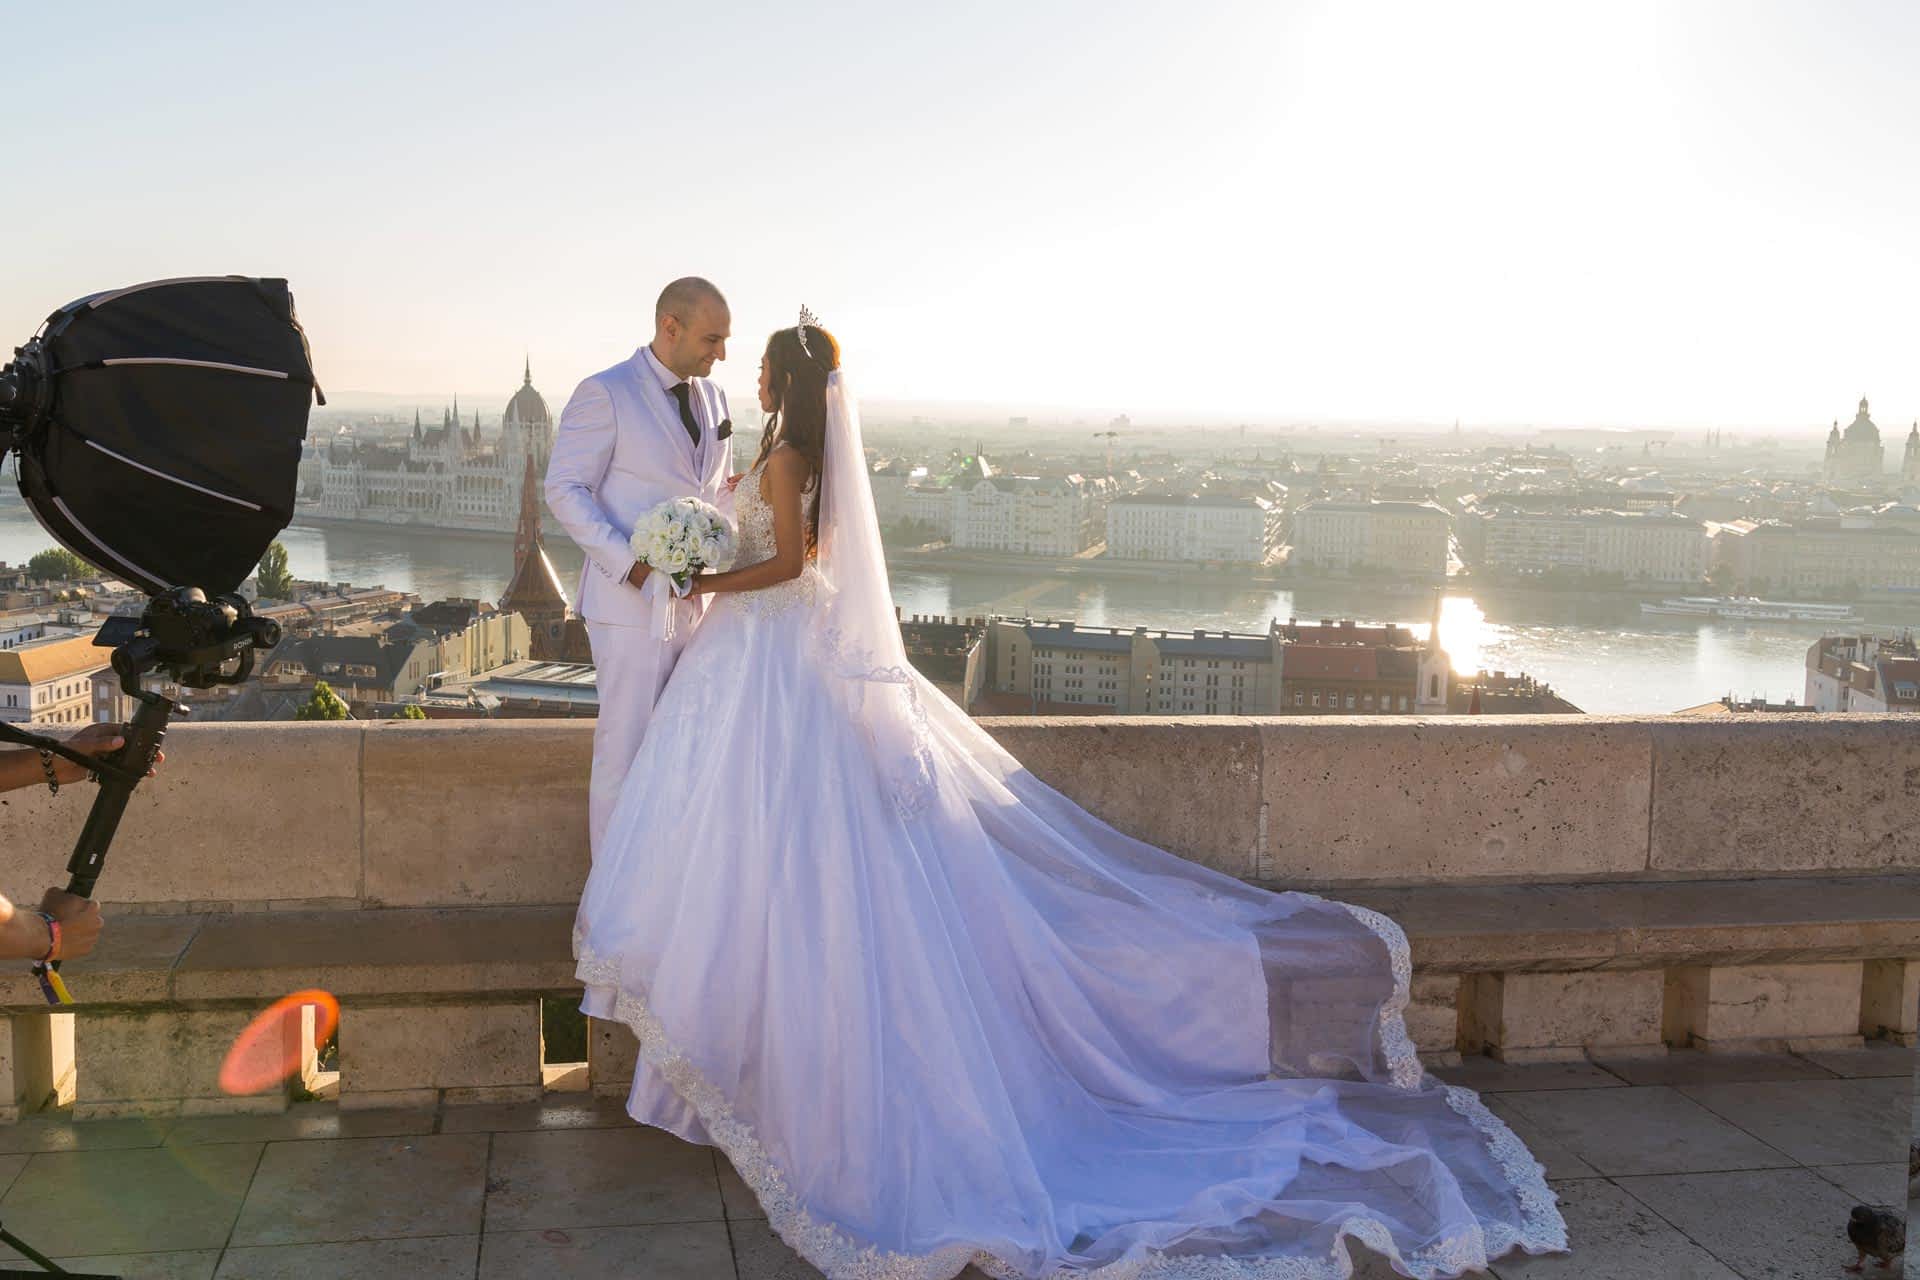 2023 Magic Proposal Photographer & Pre-Wedding Budapesta BA prewedding edit Instawalk Your memories captured by a local Photographer / Videographer in Budapest.